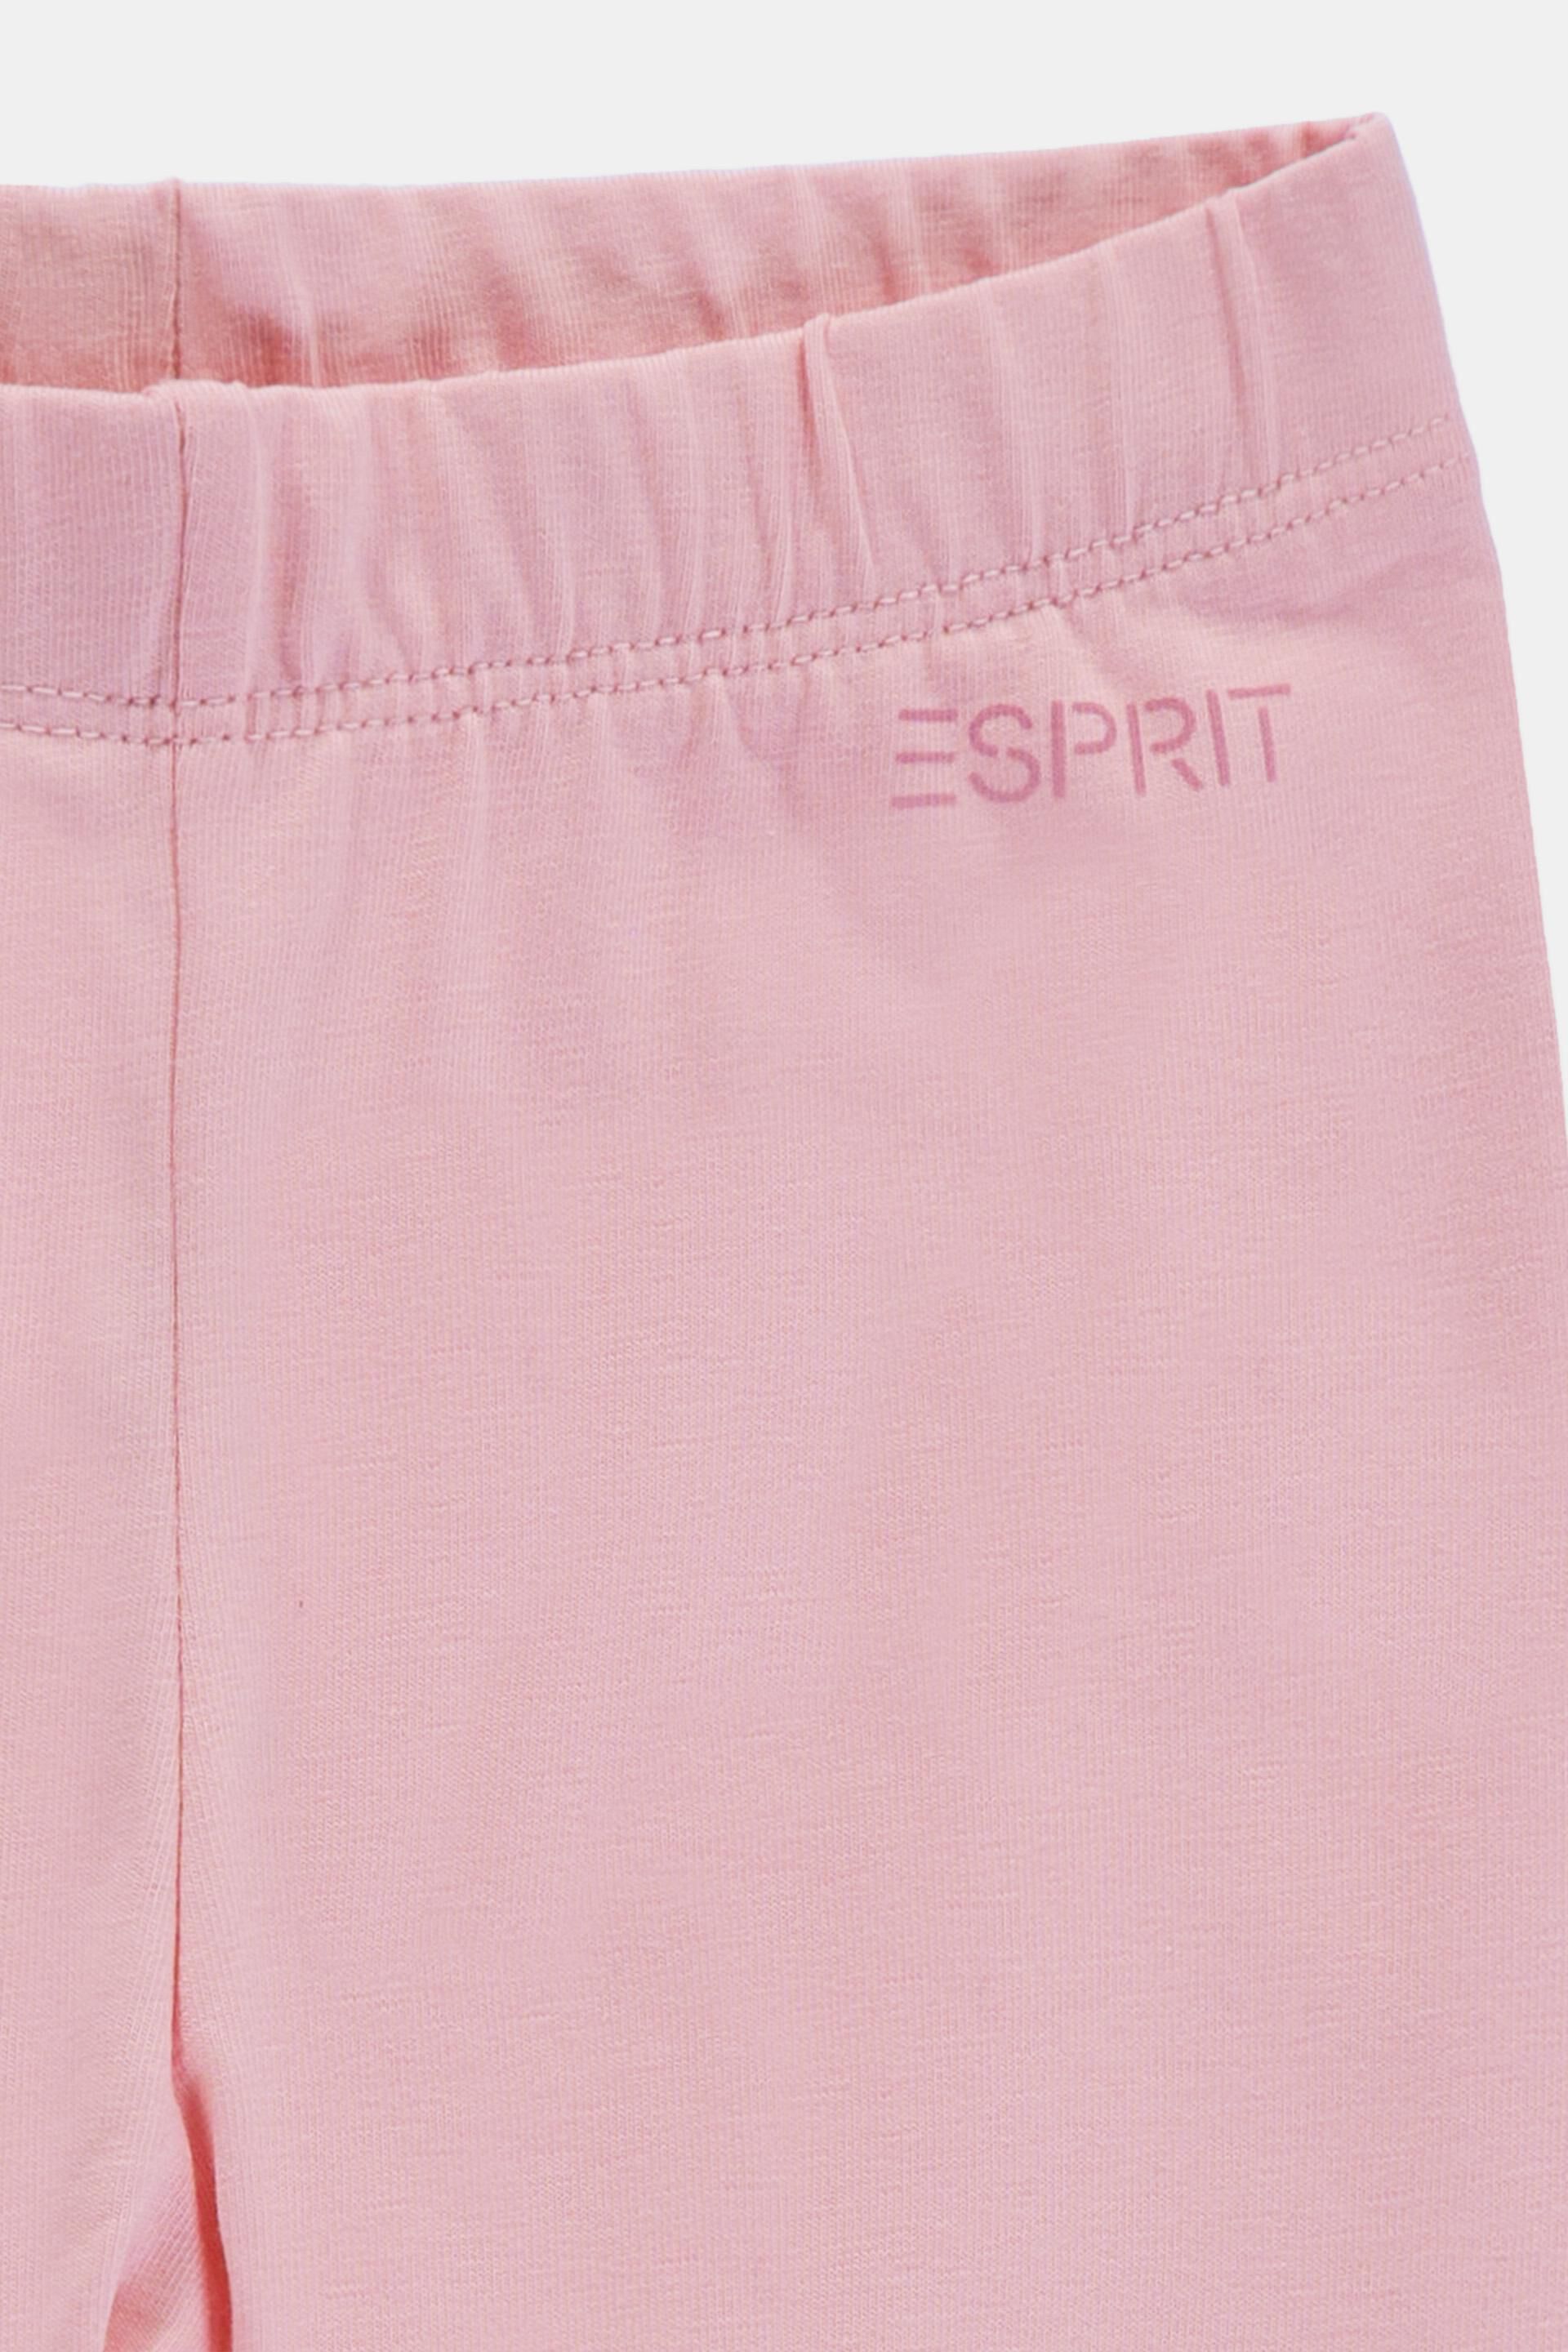 Esprit Stretch-Baumwolle Leggings aus